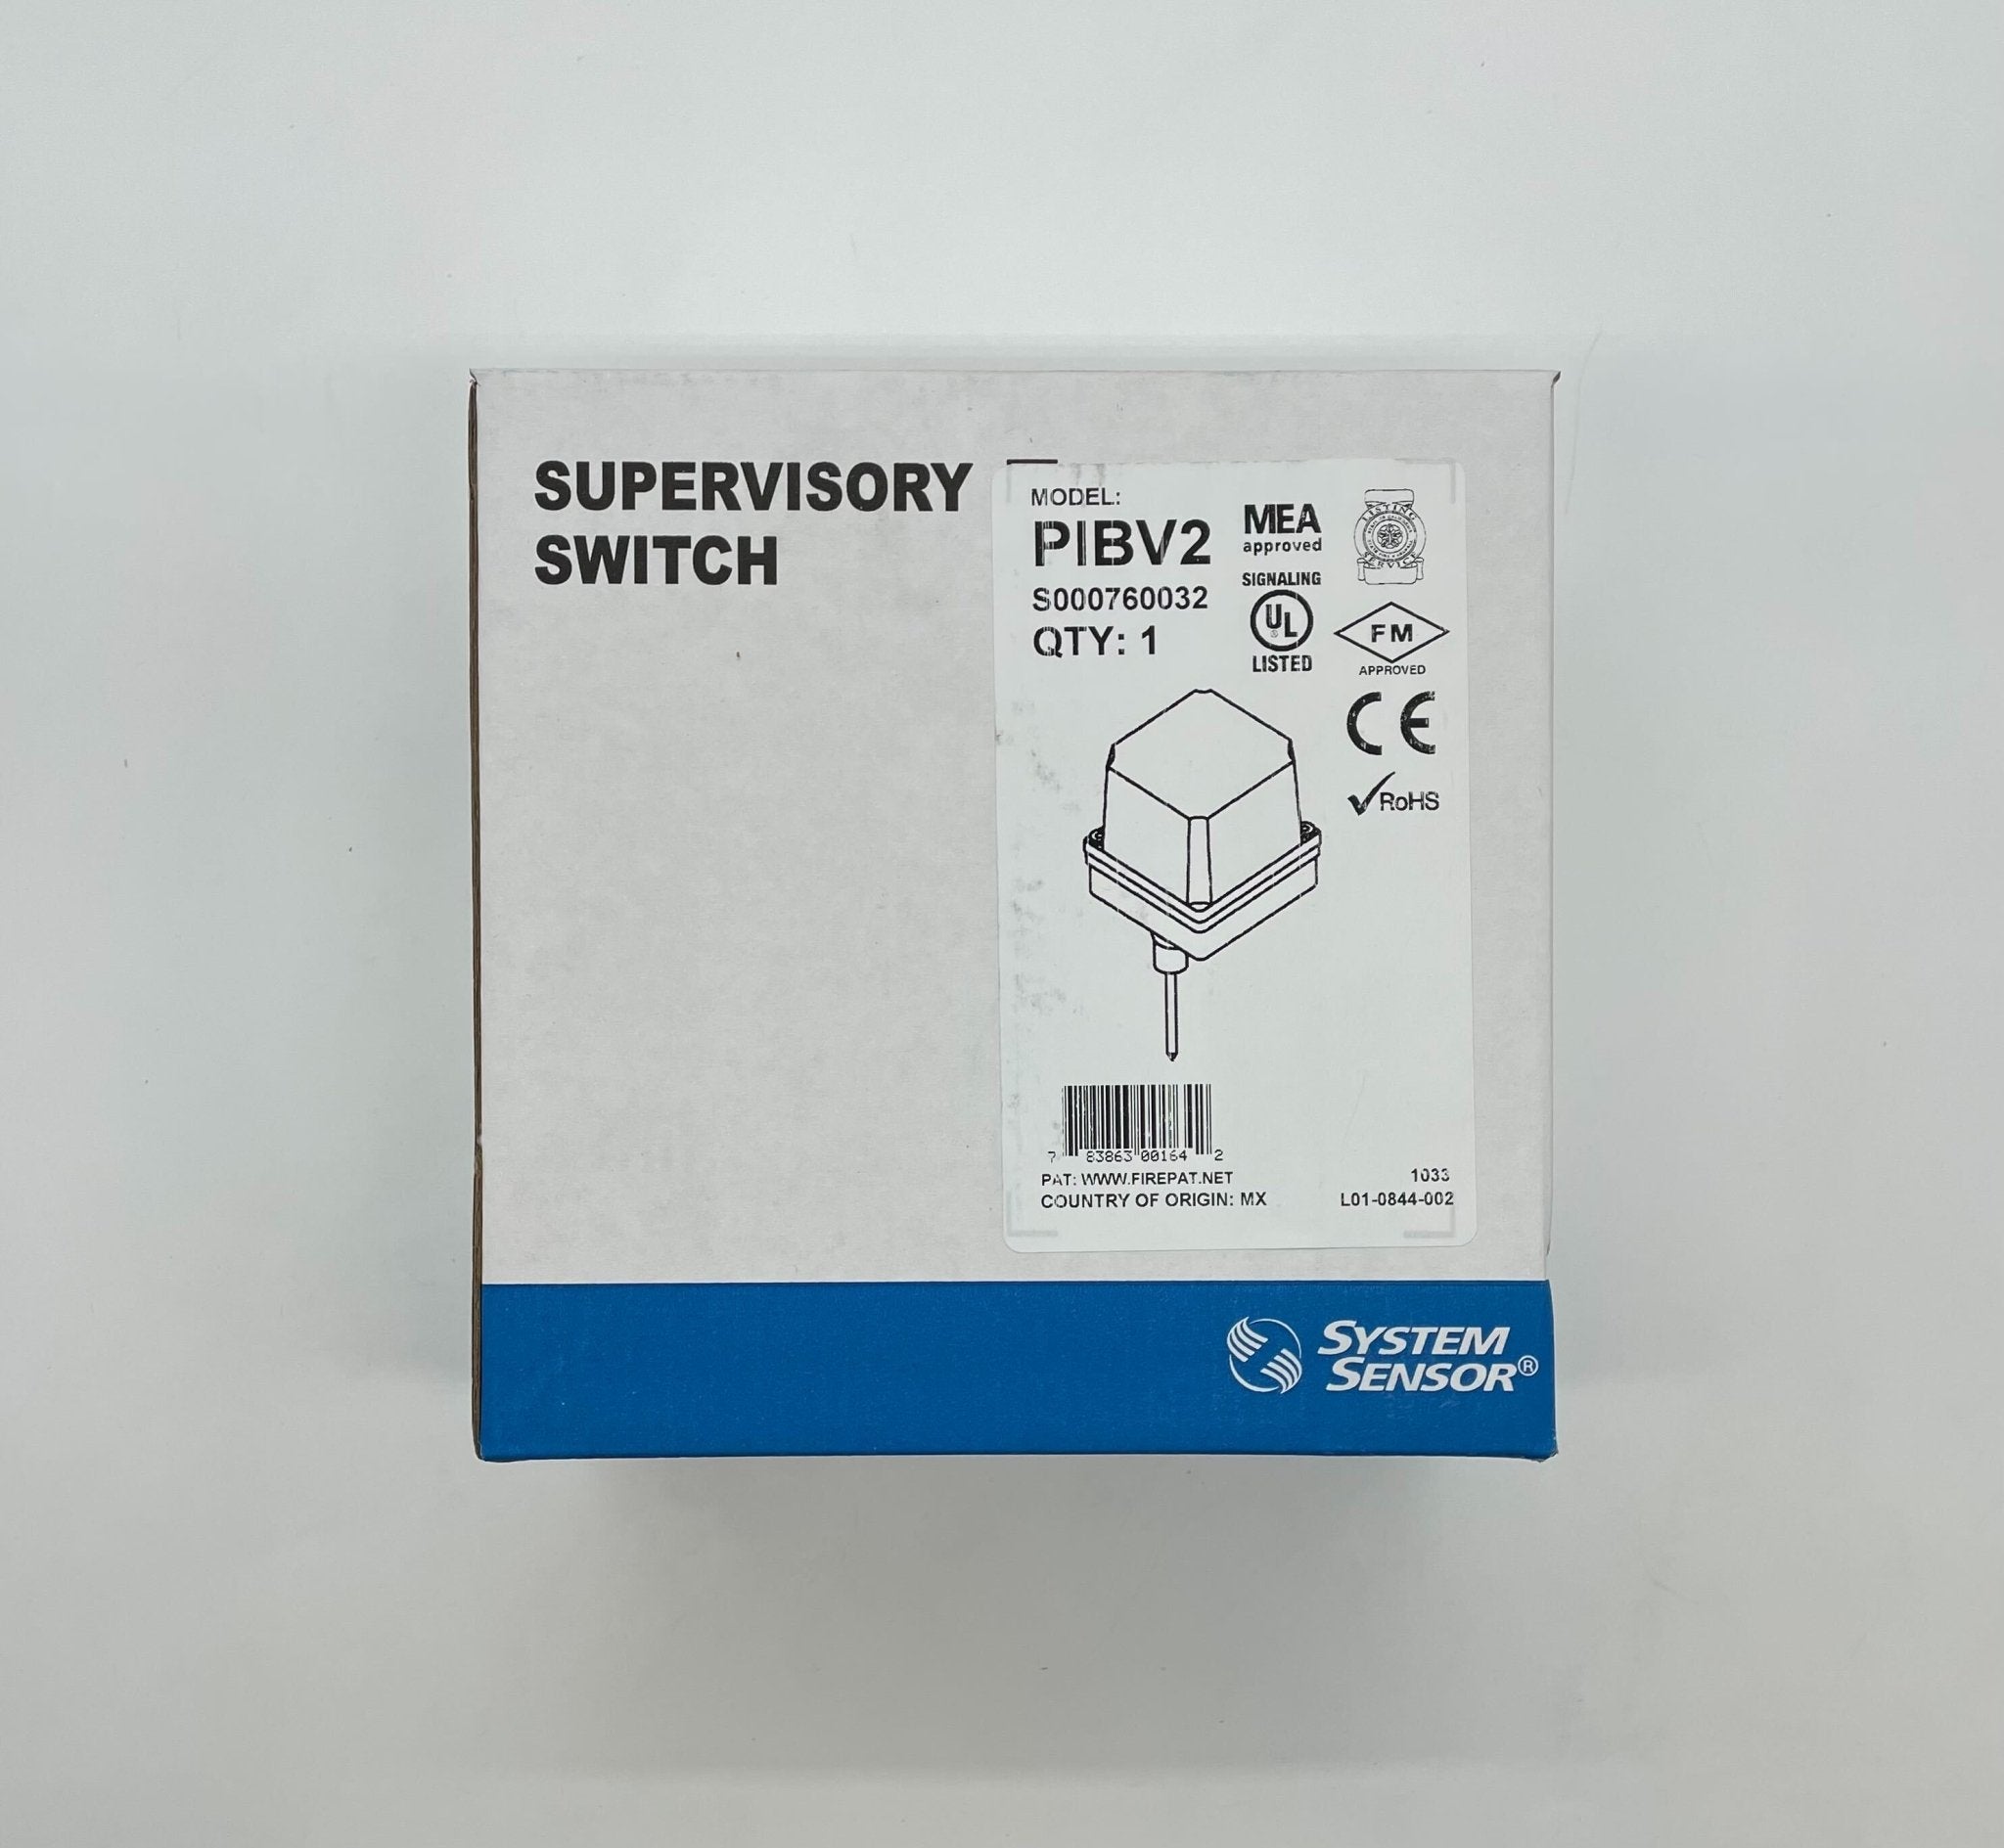 System Sensor PIBV2 Valve Supervisory Switch - The Fire Alarm Supplier